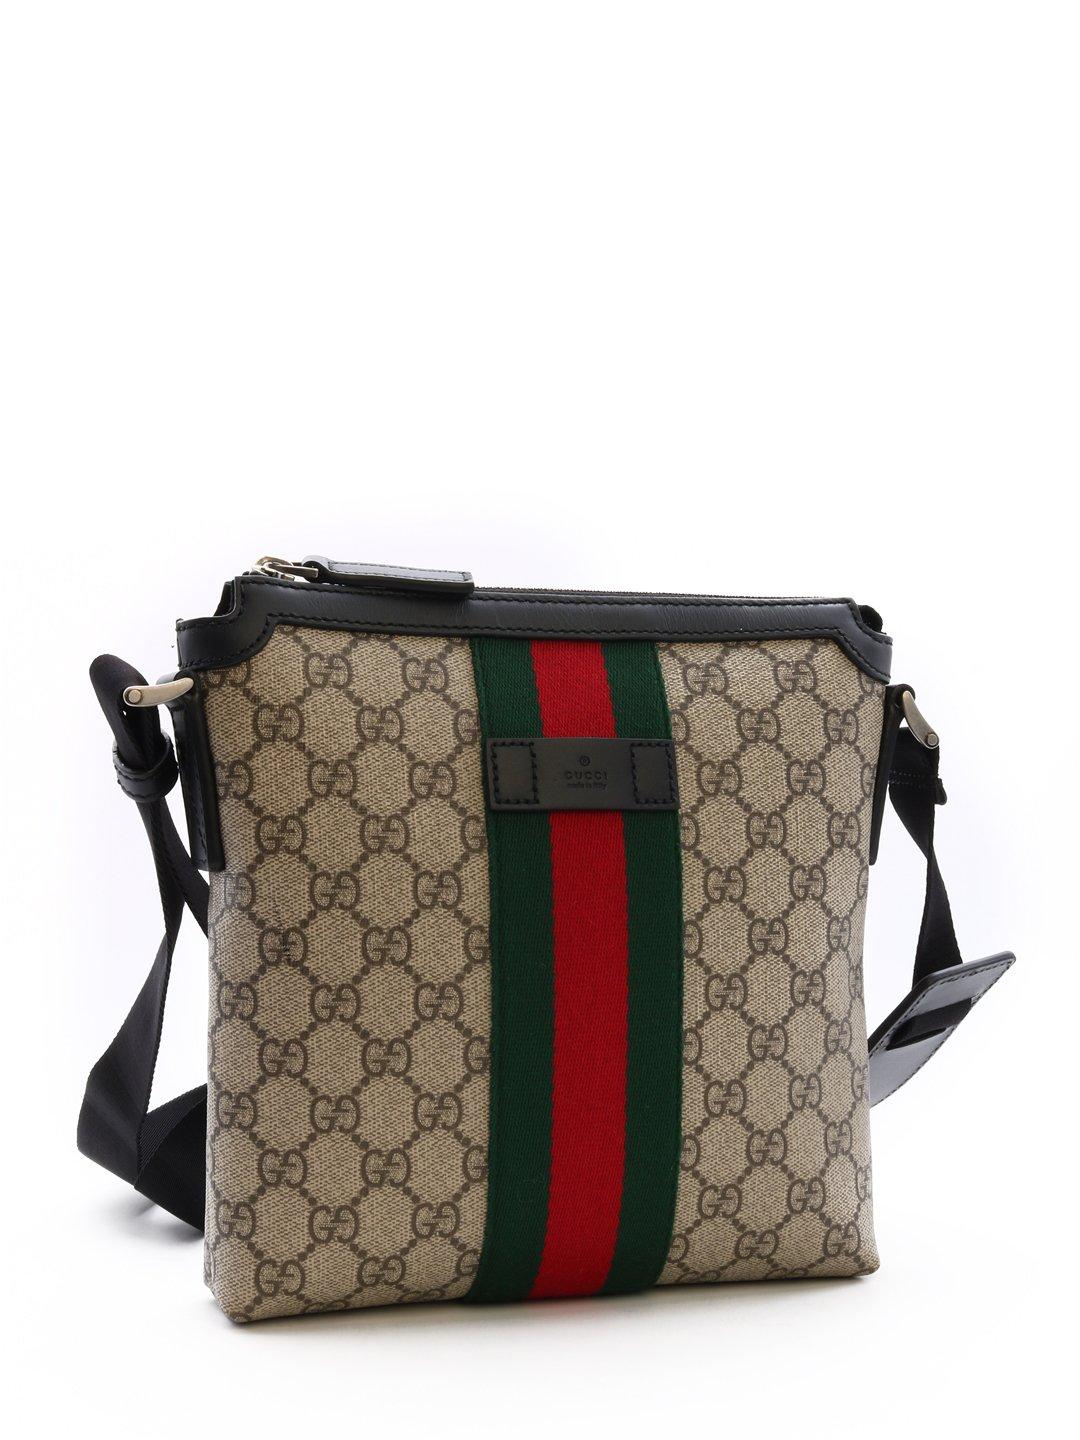 Gucci Canvas Web GG Supreme Flat Messenger Bag in Beige (Natural) for Men - Save 13% - Lyst